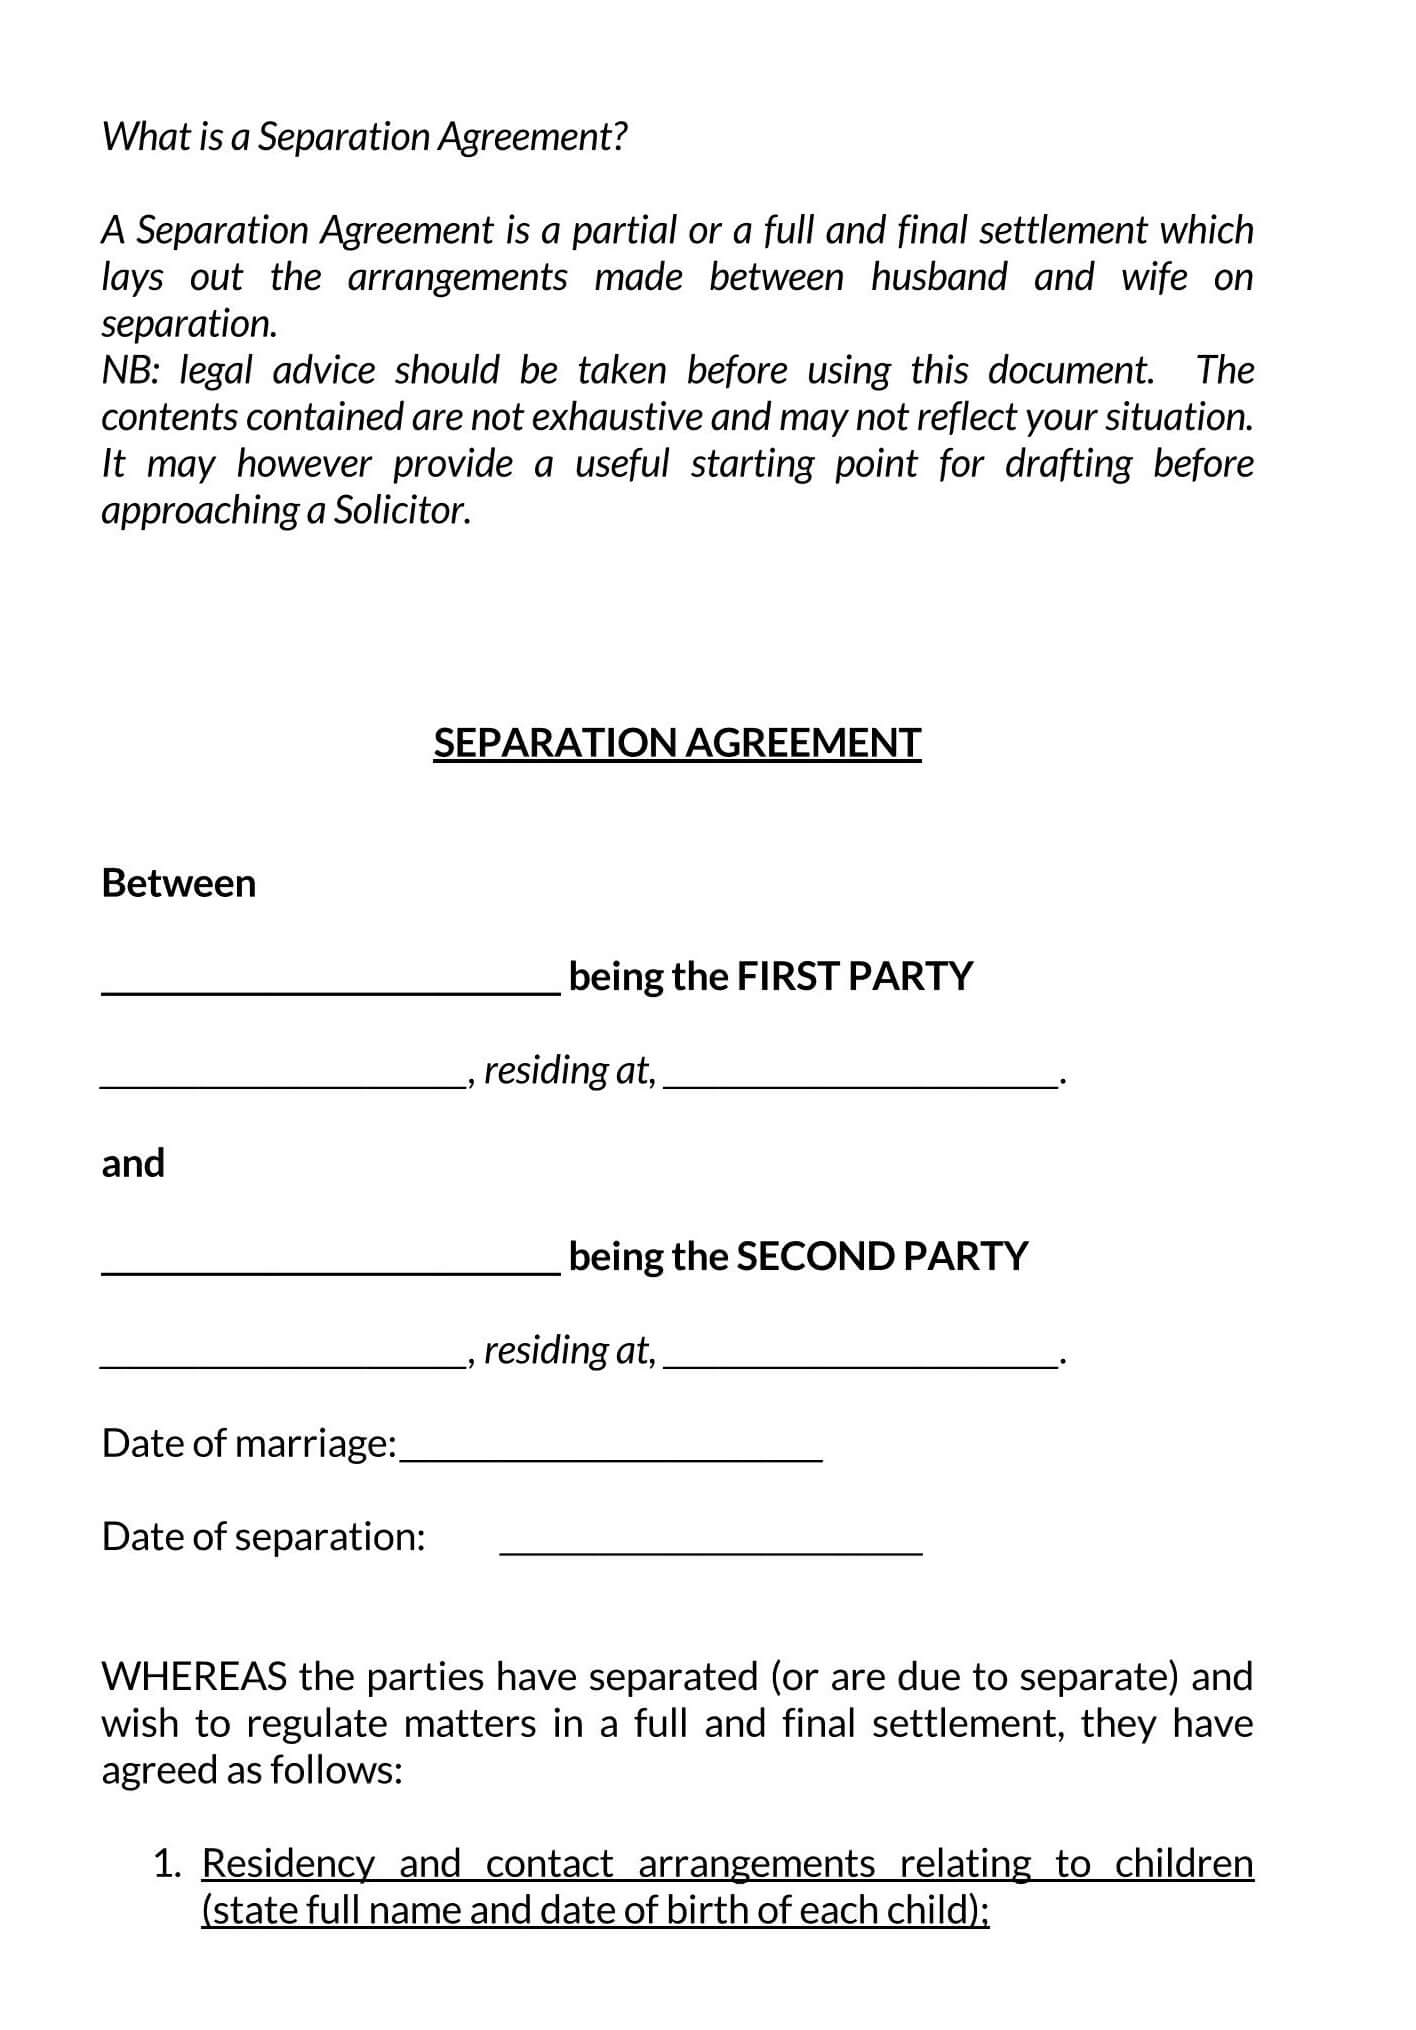 38-free-separation-agreement-templates-word-pdf